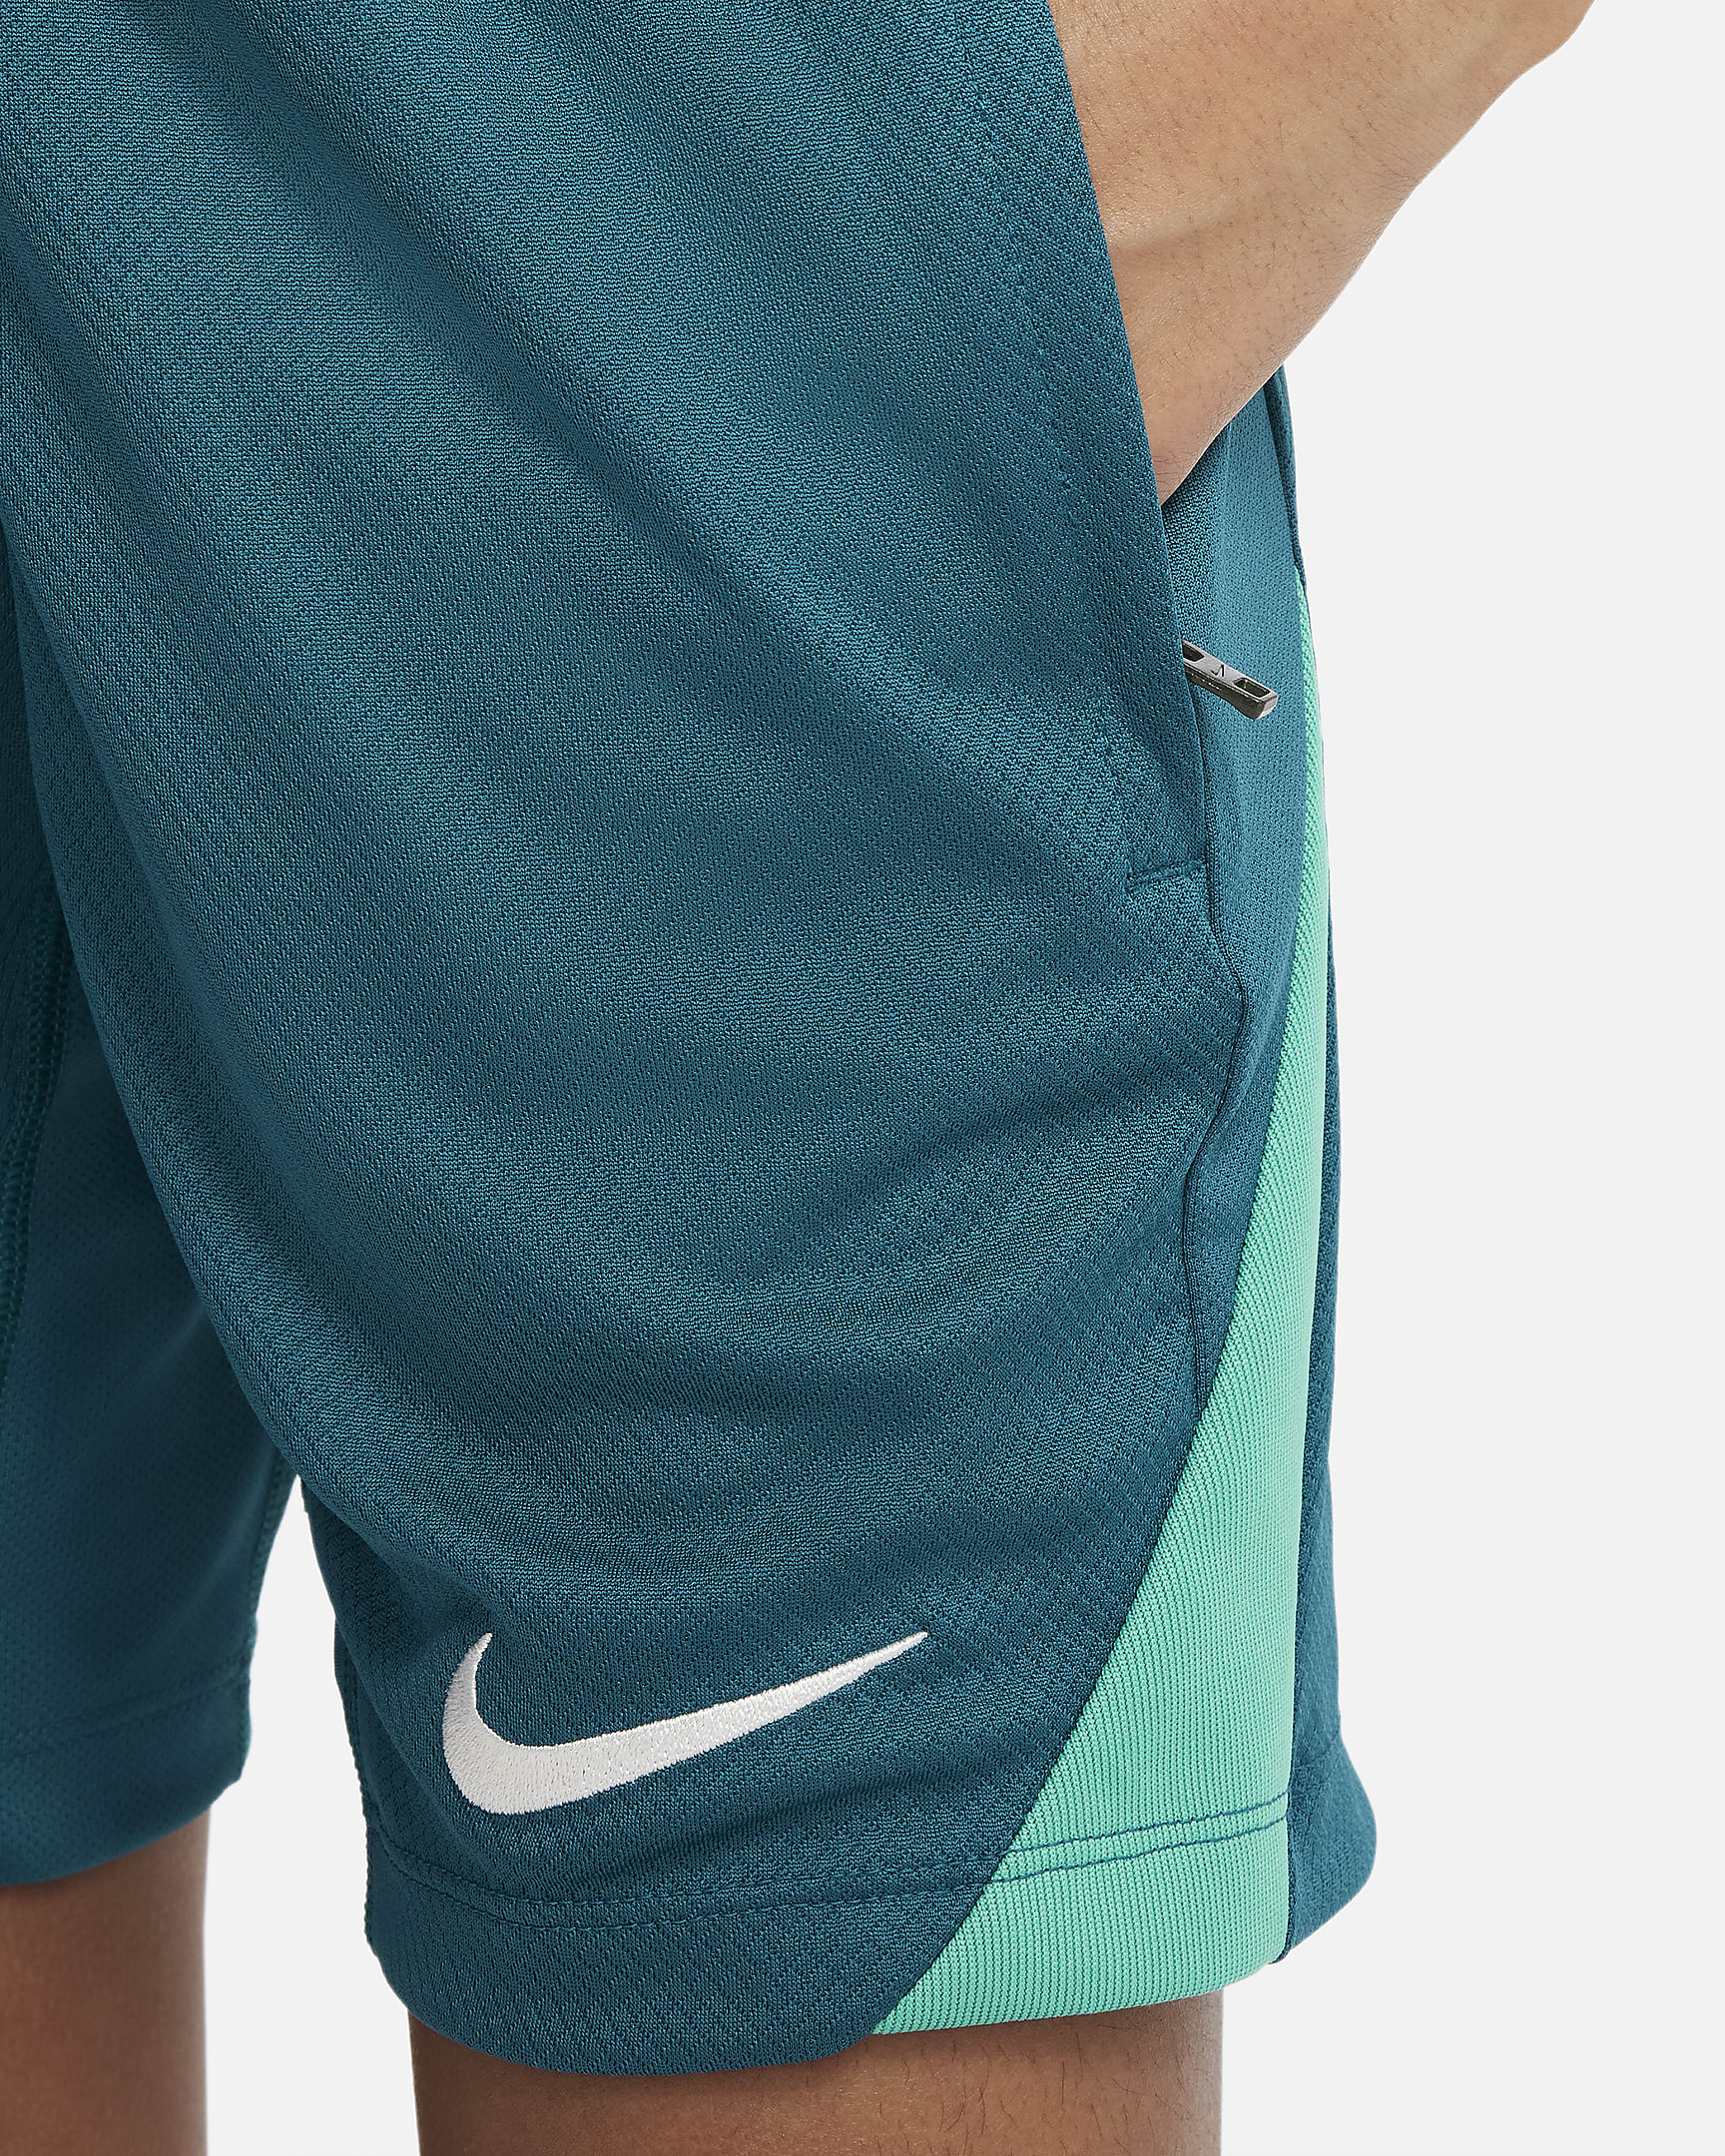 Portugal Strike Older Kids' Nike Dri-FIT Football Knit Shorts - Geode Teal/Kinetic Green/Sail